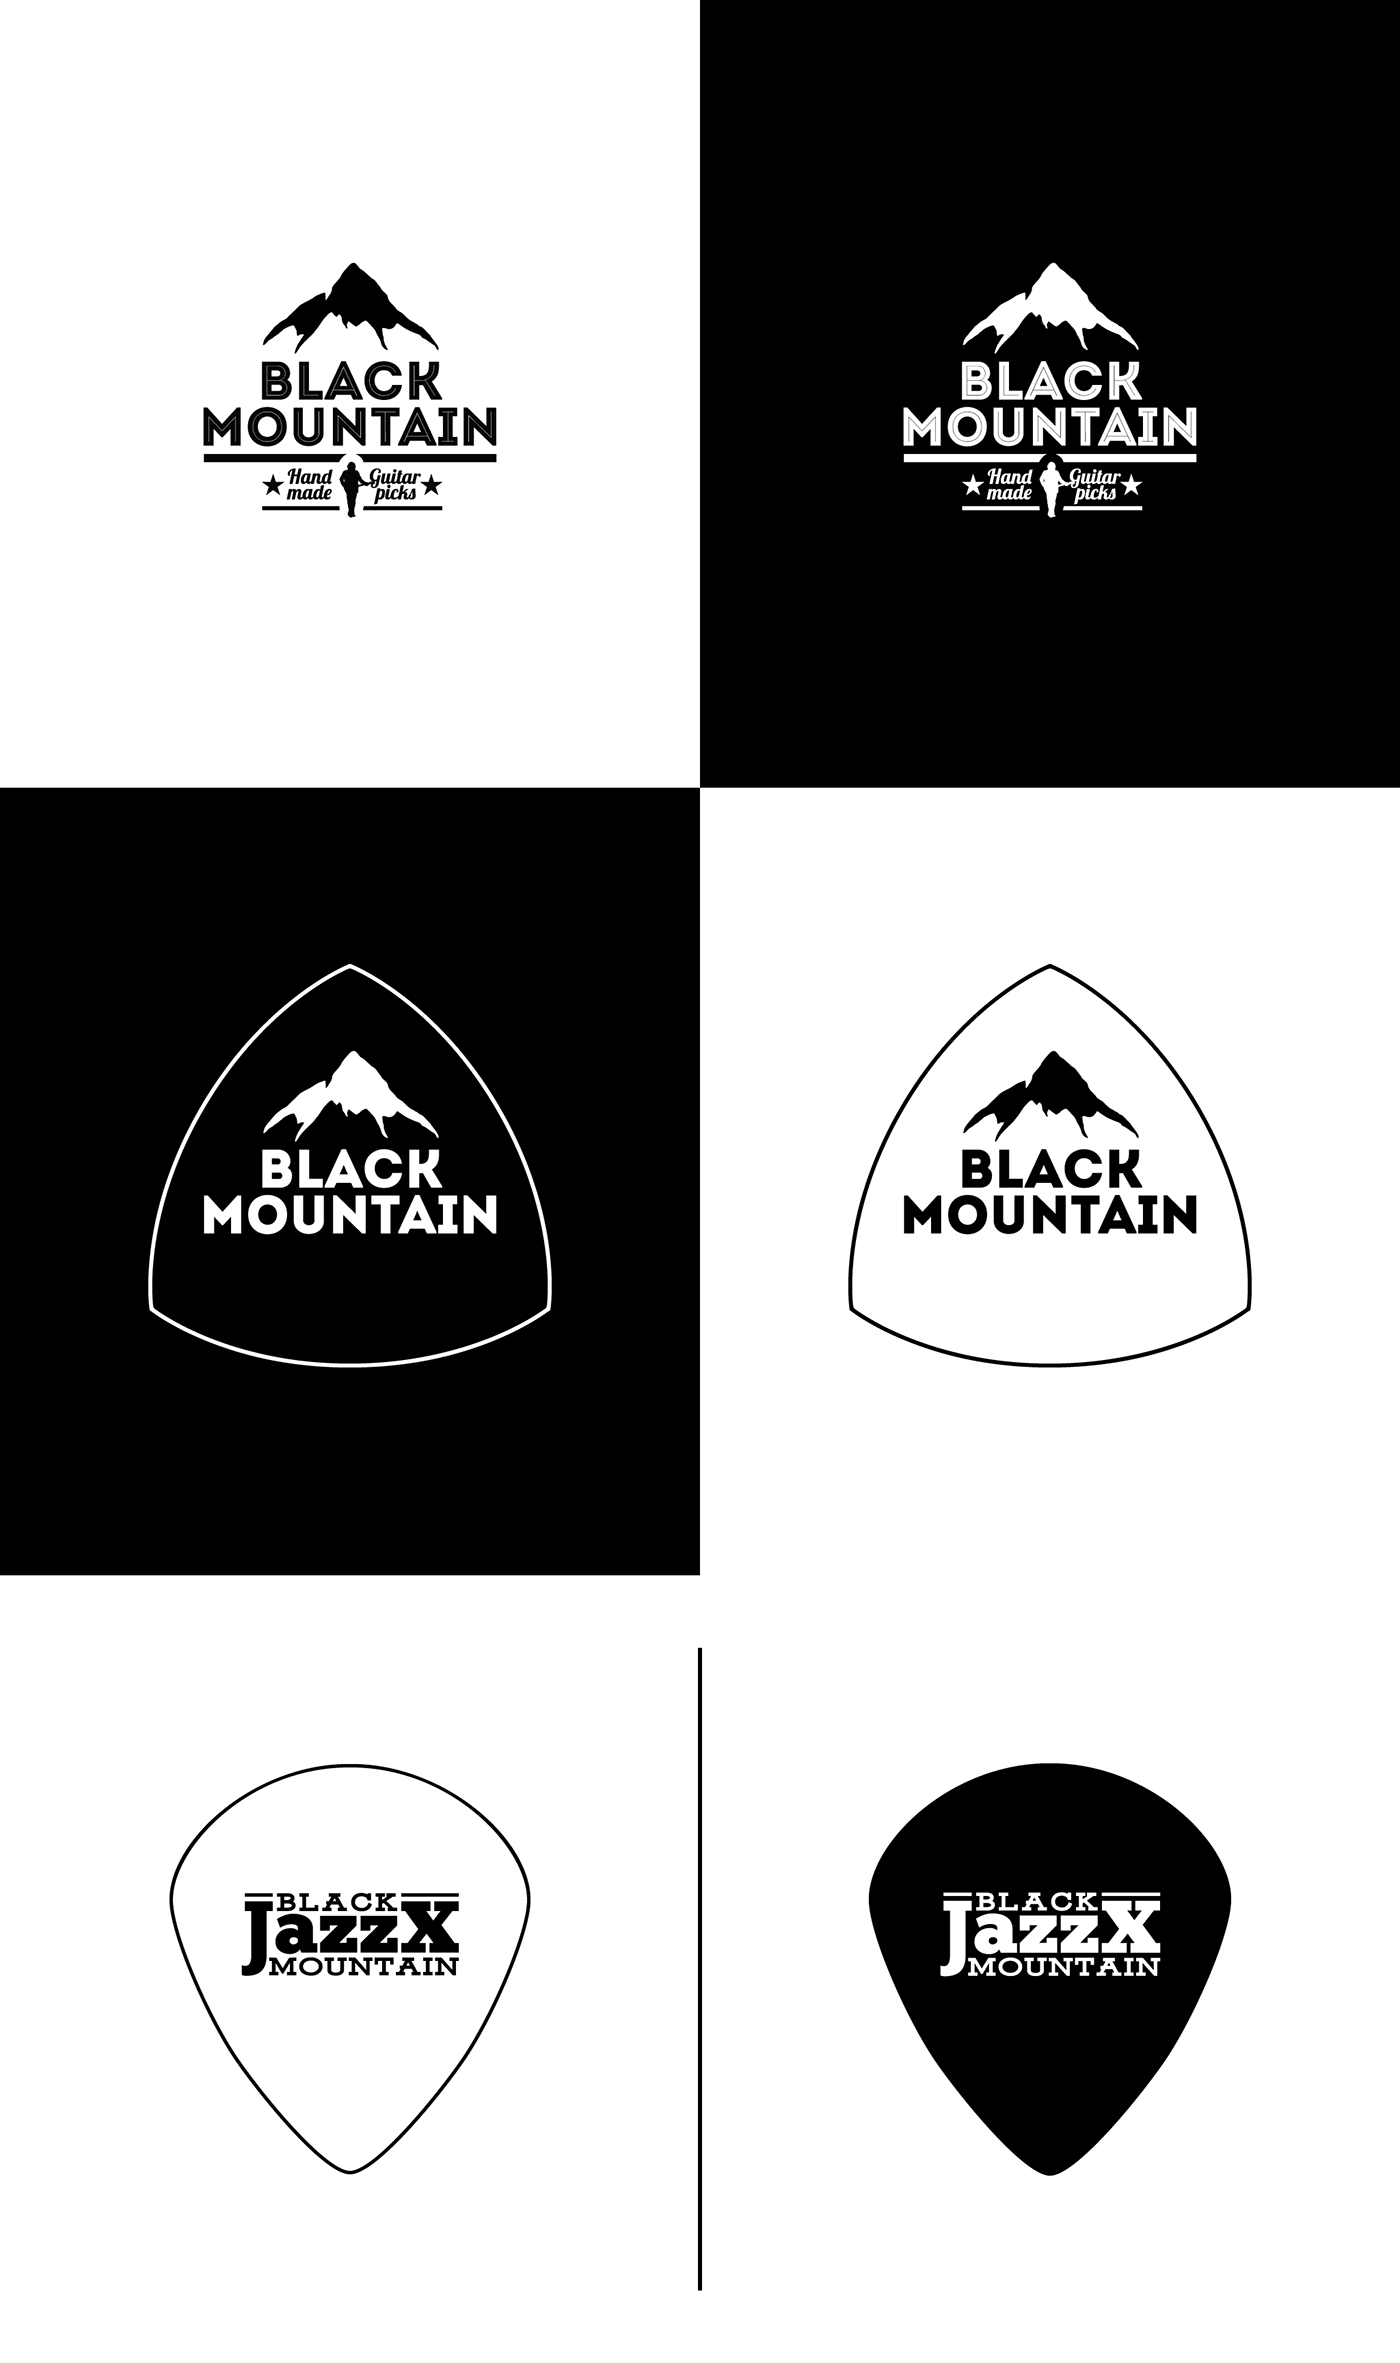 Guitar Mountain Logo - Black Mountain Guitar Picks - Logo & Print Design on Behance